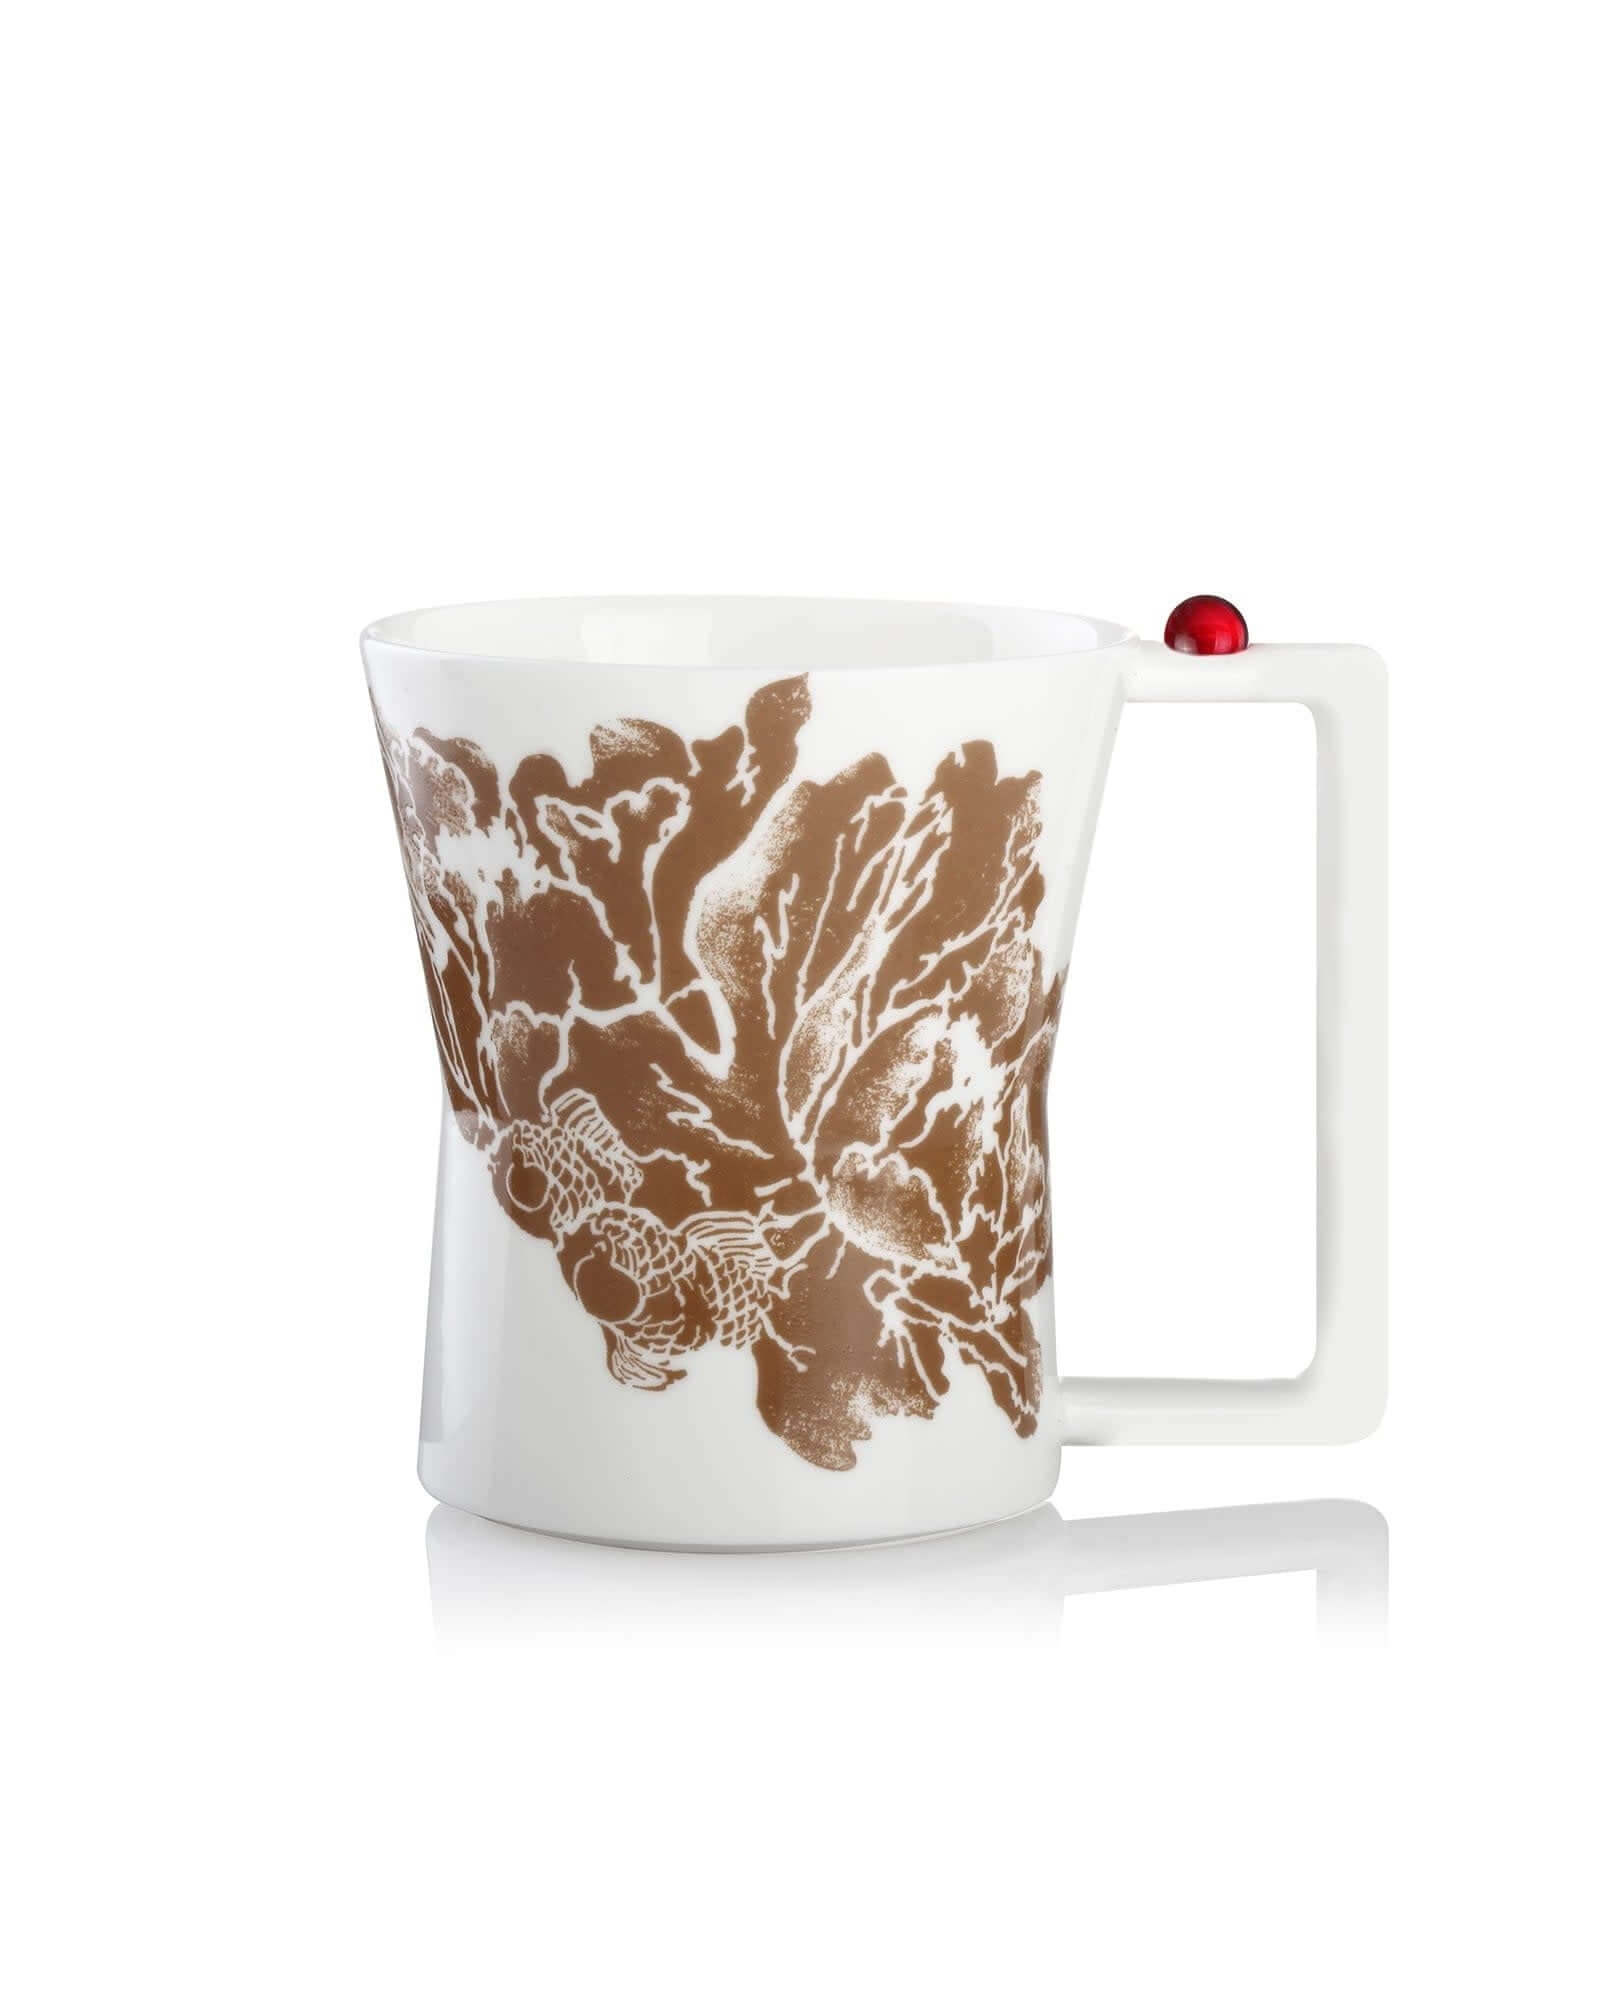 LIULI Crystal Art Coffee Mug, "A Leisurely Drop of Red"